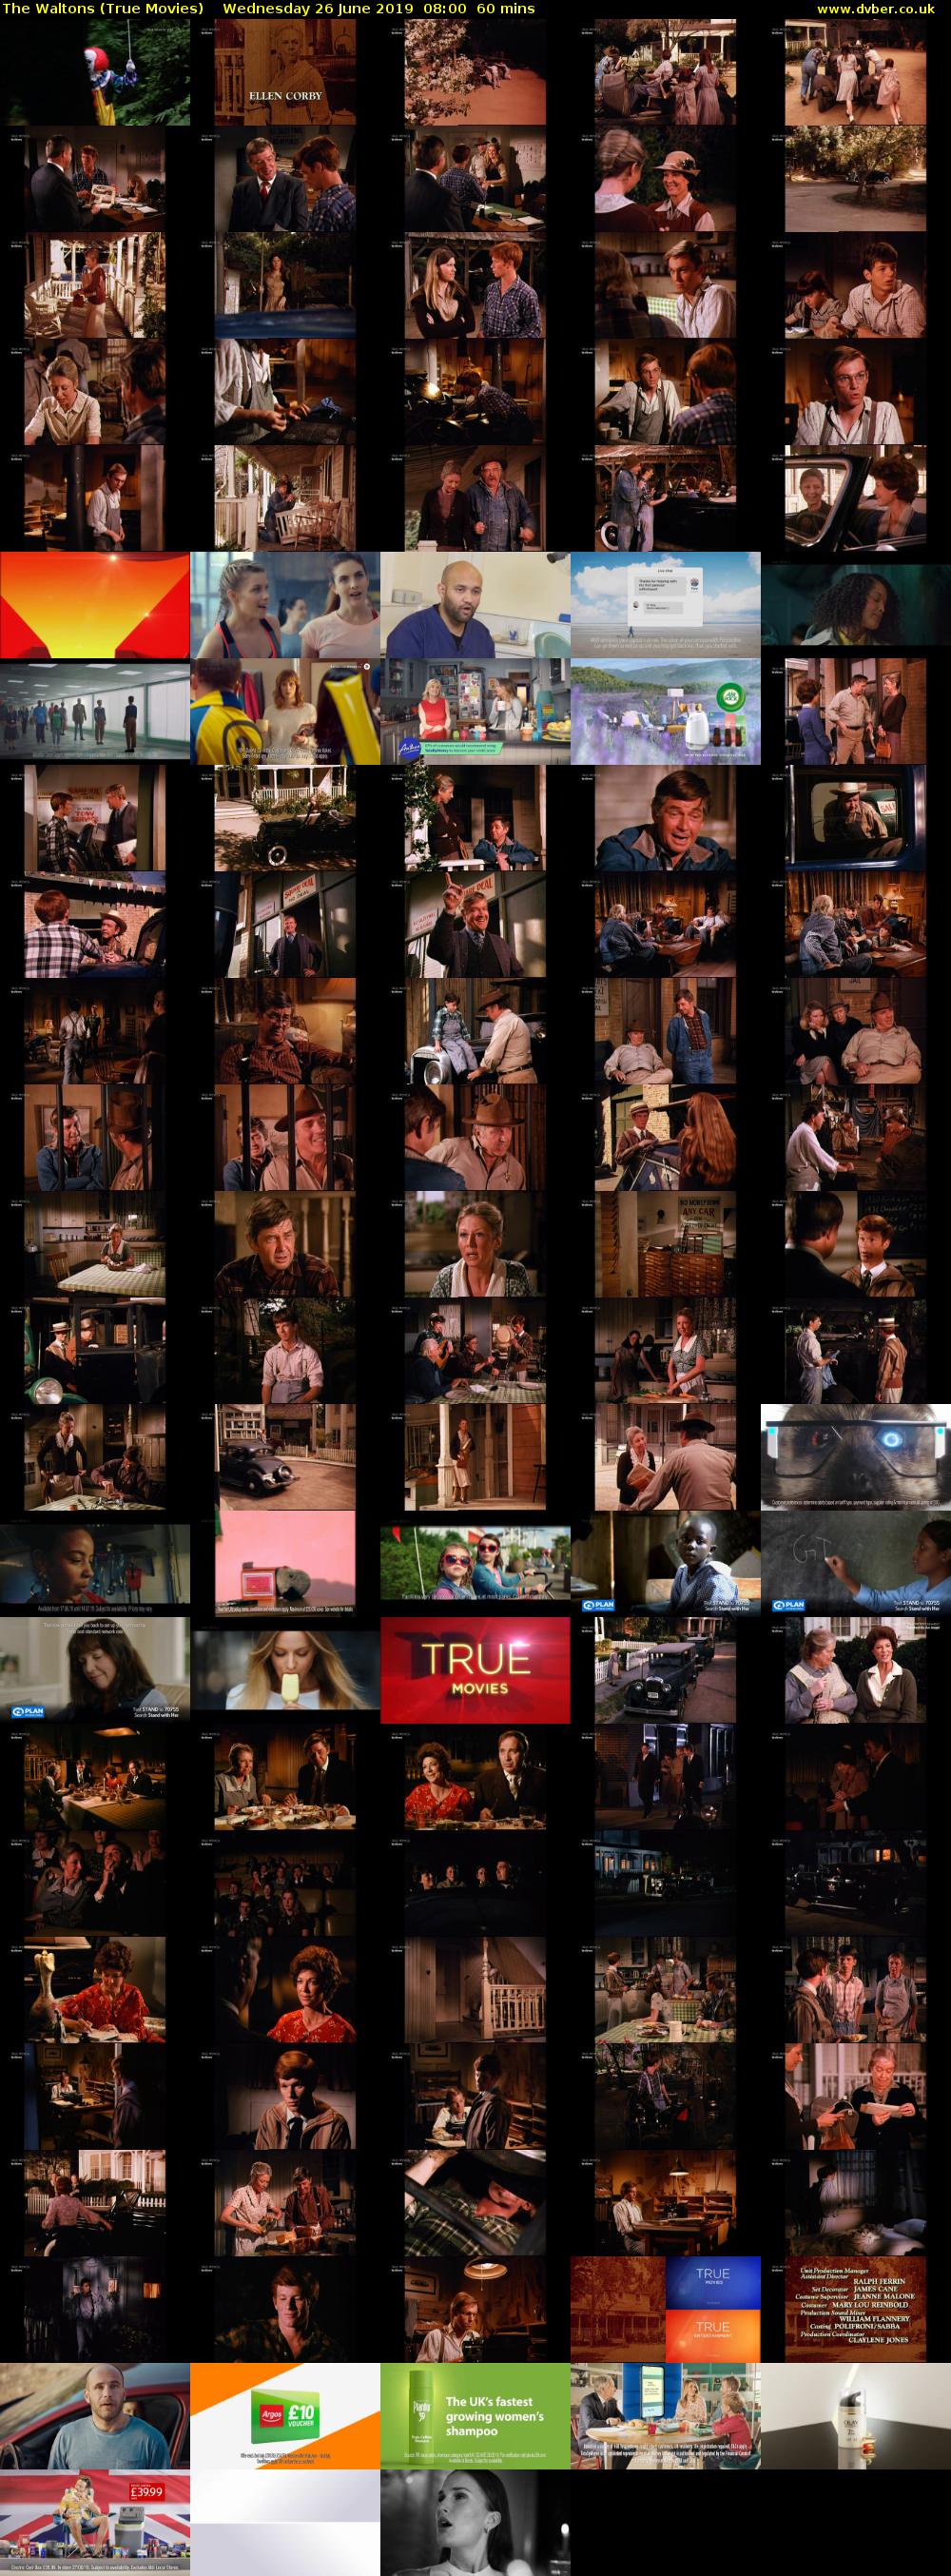 The Waltons (True Movies) Wednesday 26 June 2019 08:00 - 09:00